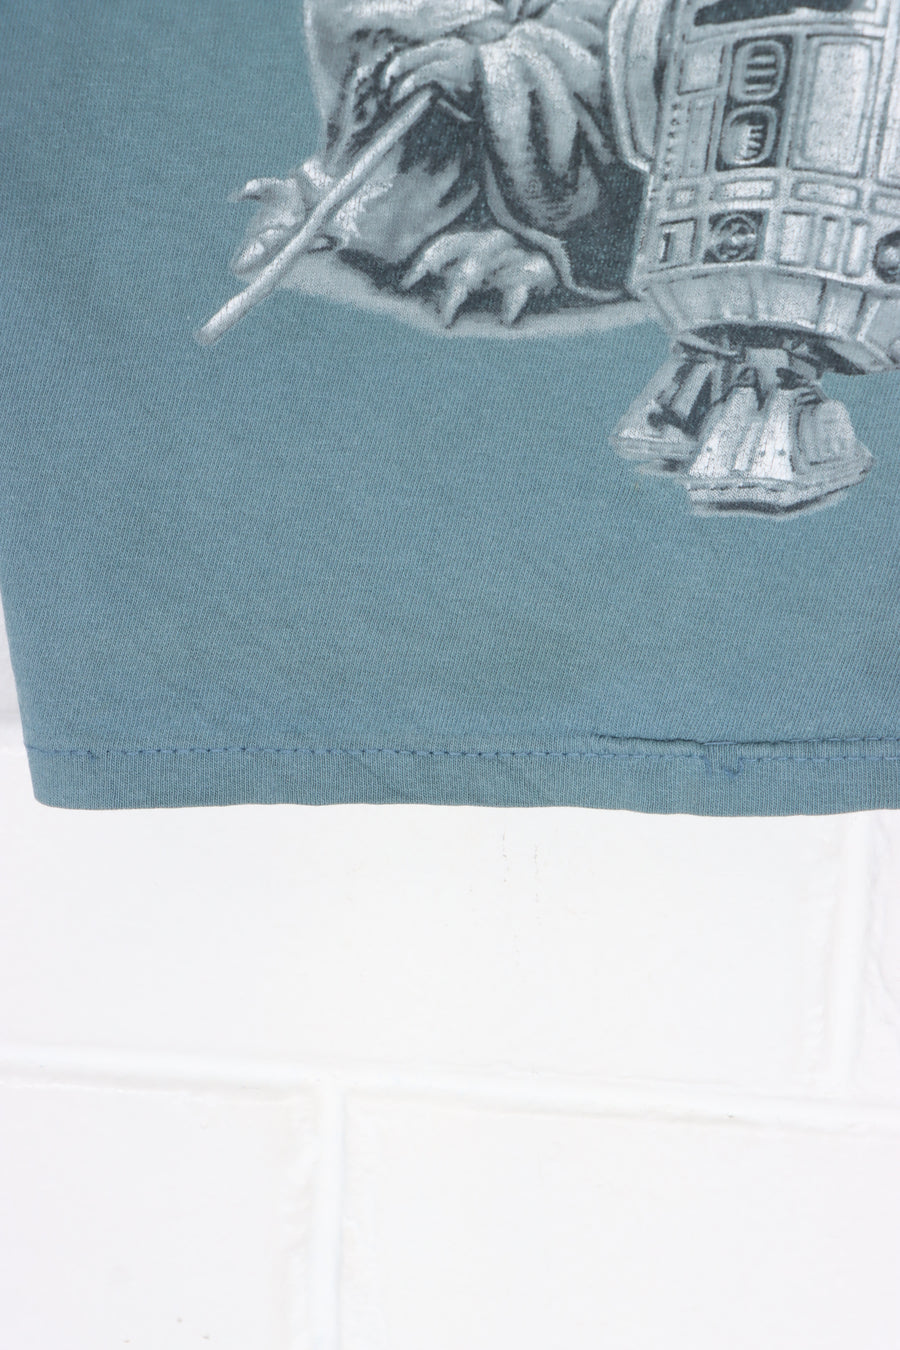 Star Wars 1995 Characters Single Stitch T-Shirt USA Made (S)